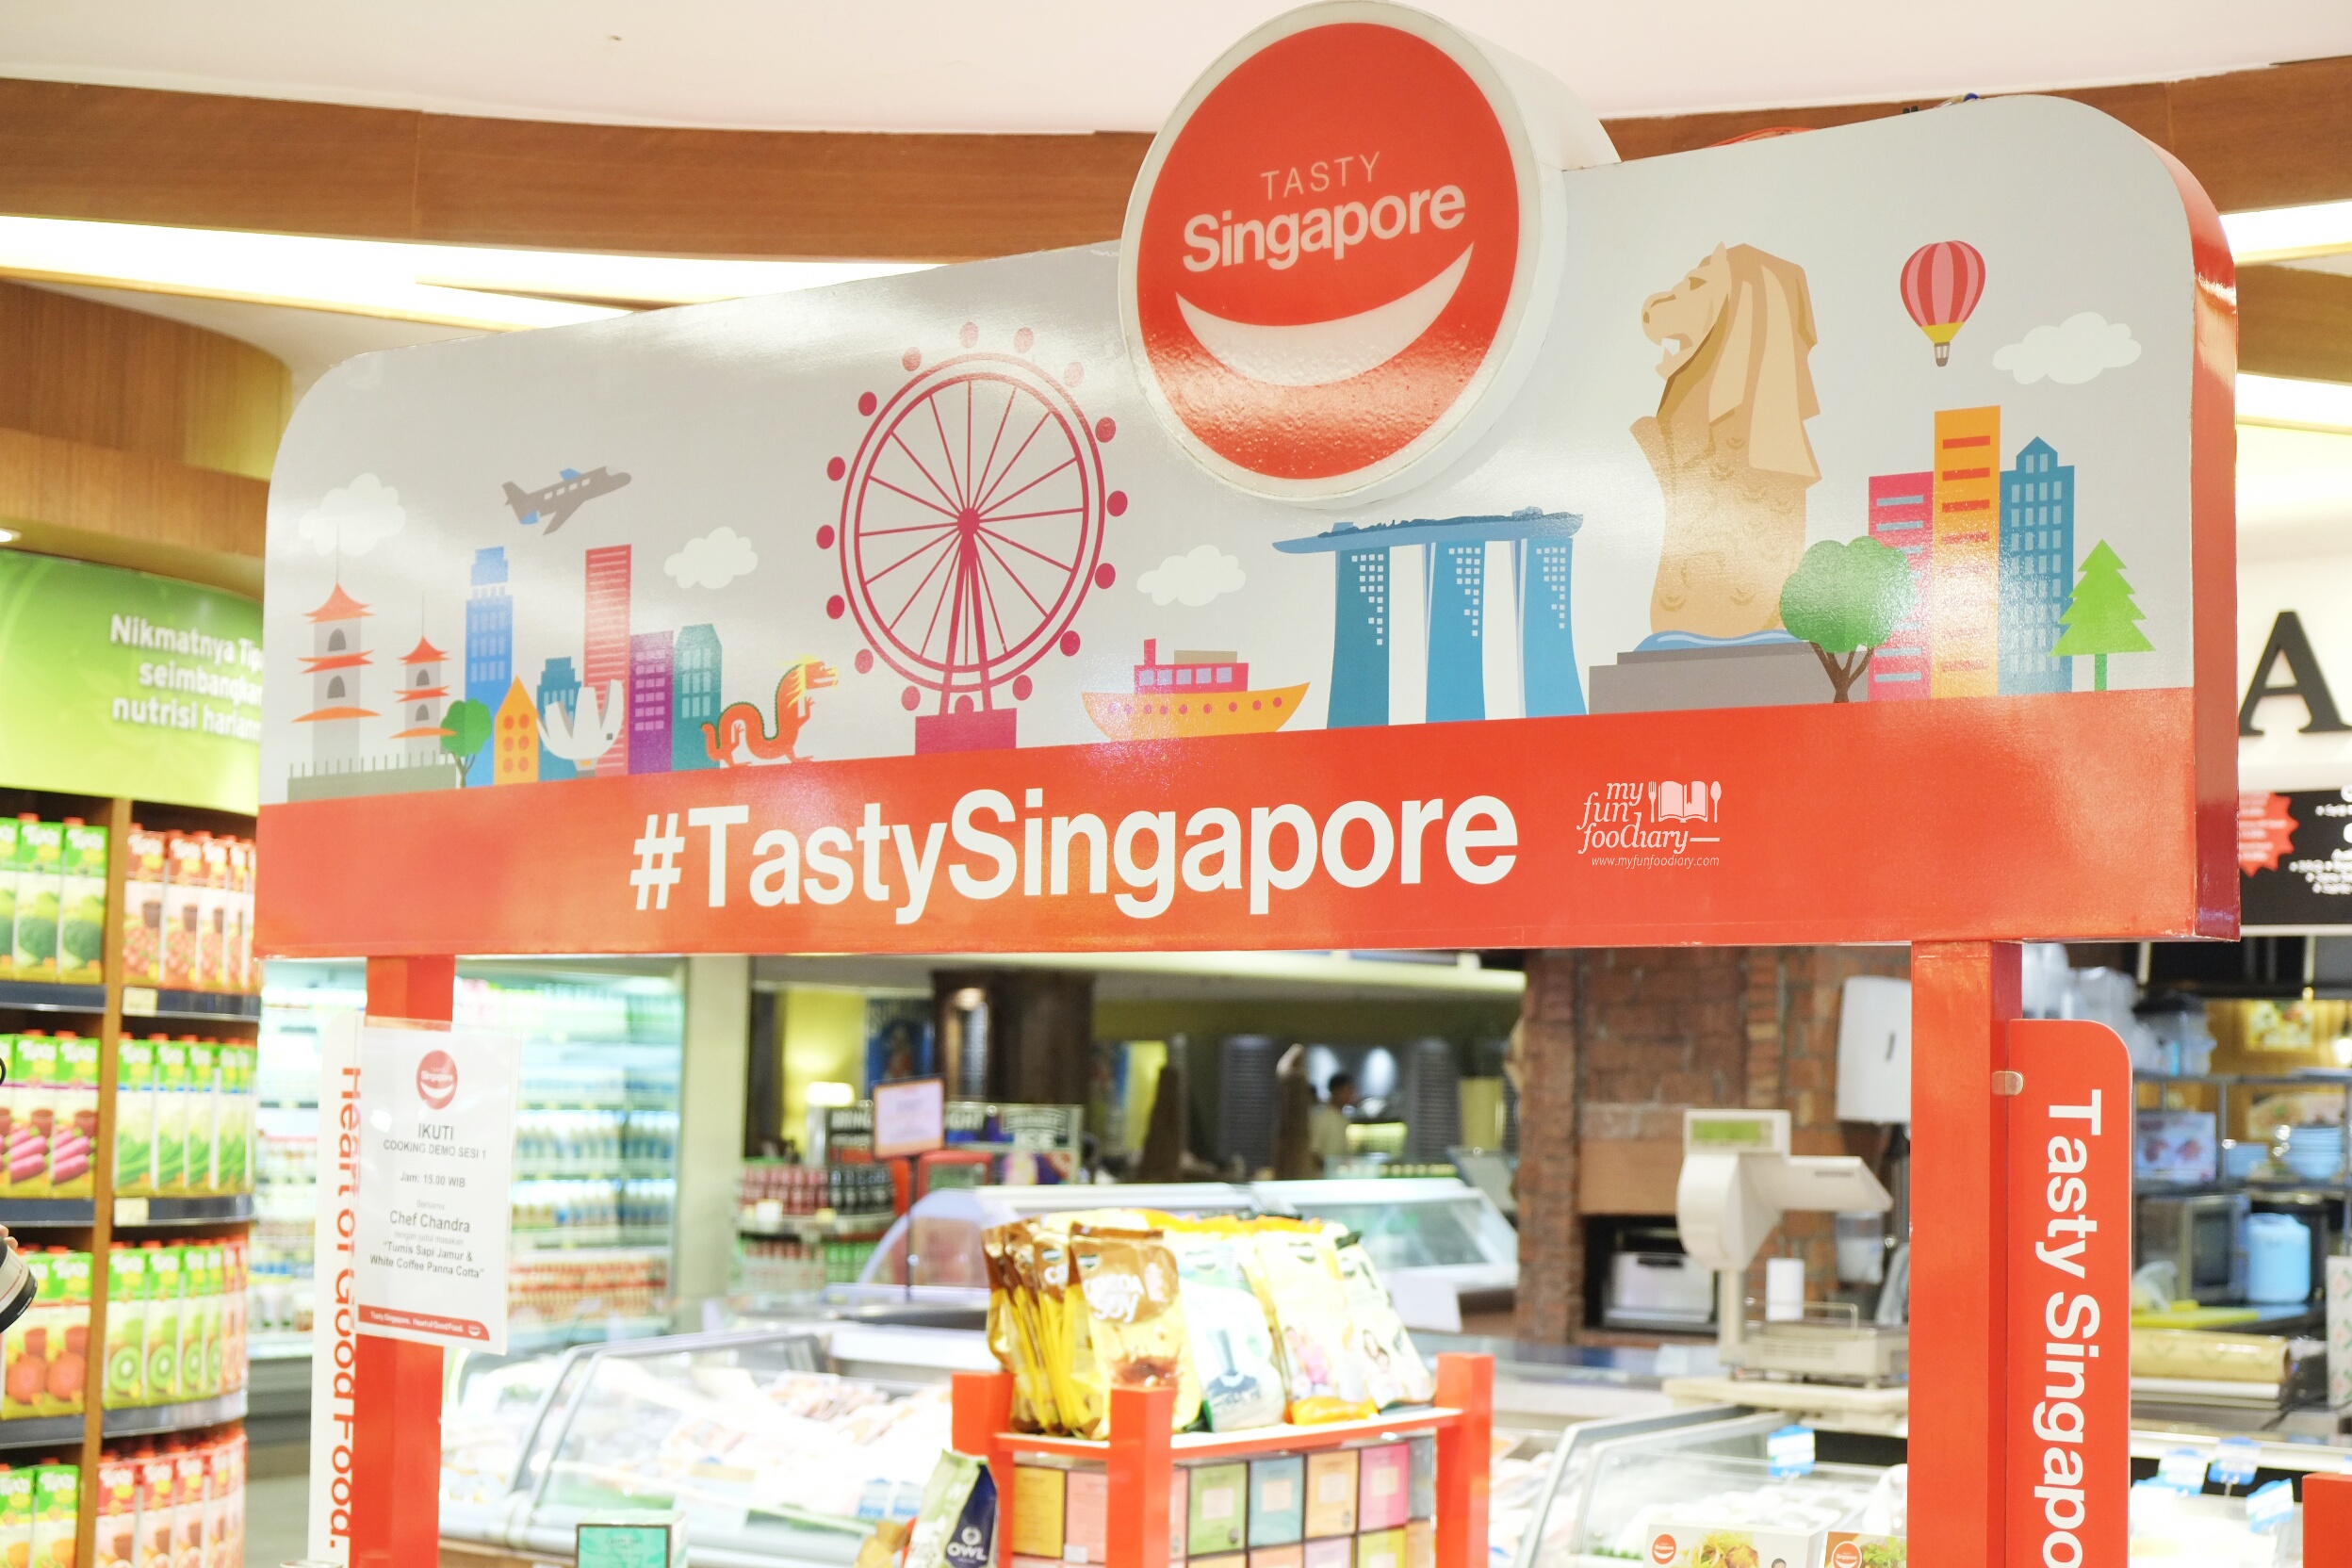 Tasty Singapore Products Singapore Brands at Food Hall Plaza Senayan by Myfunfoodiary